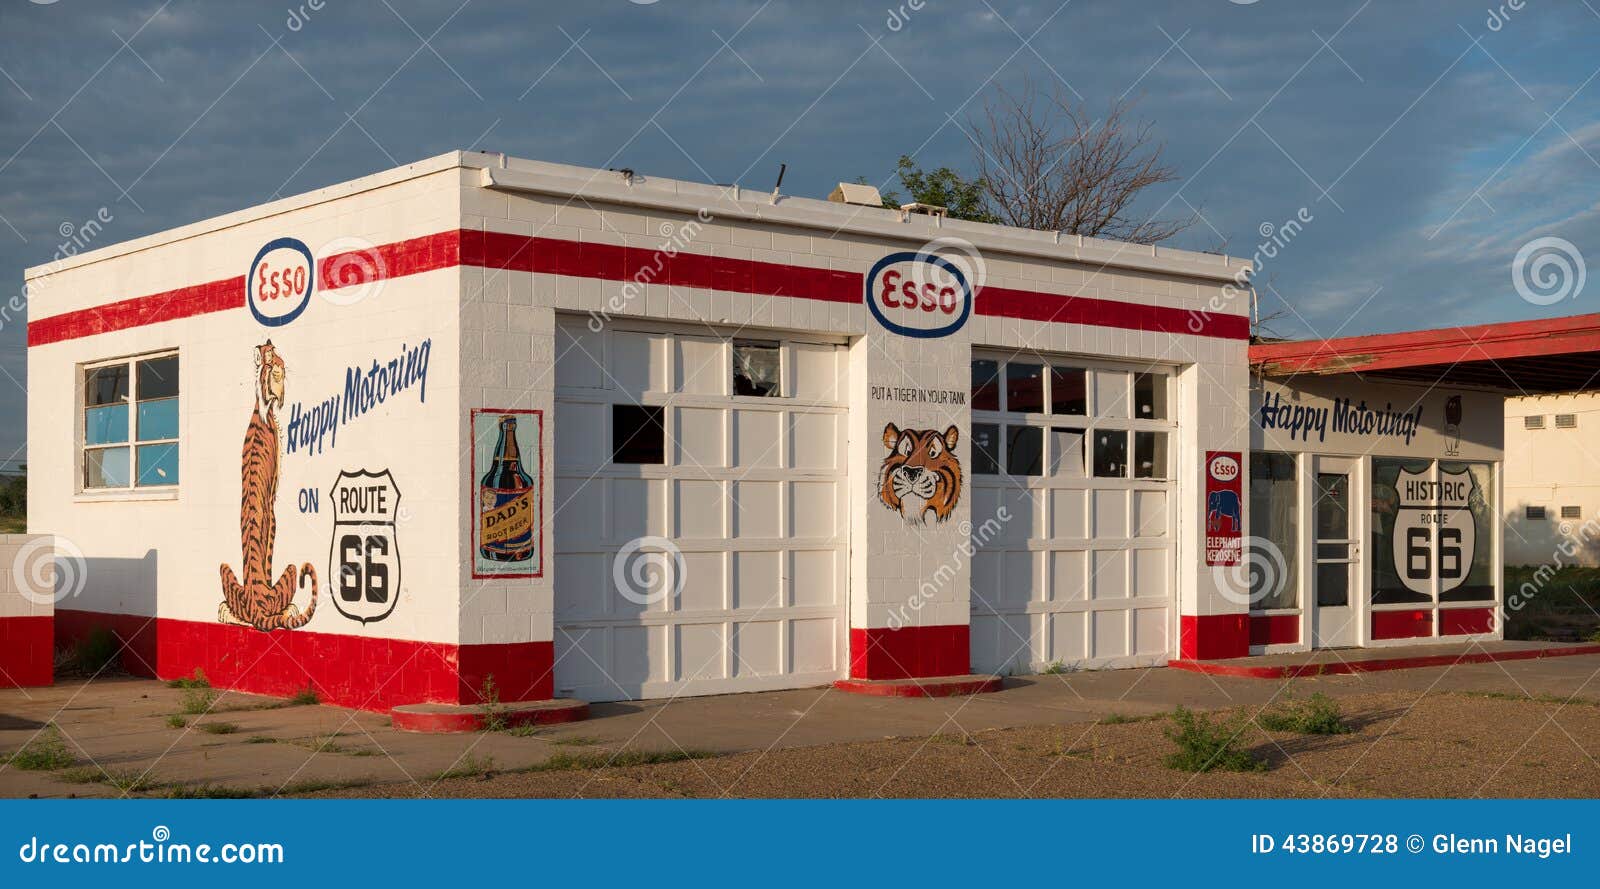 Esso Gas Station Editorial Stock Photo Image Of Landmark 43869728